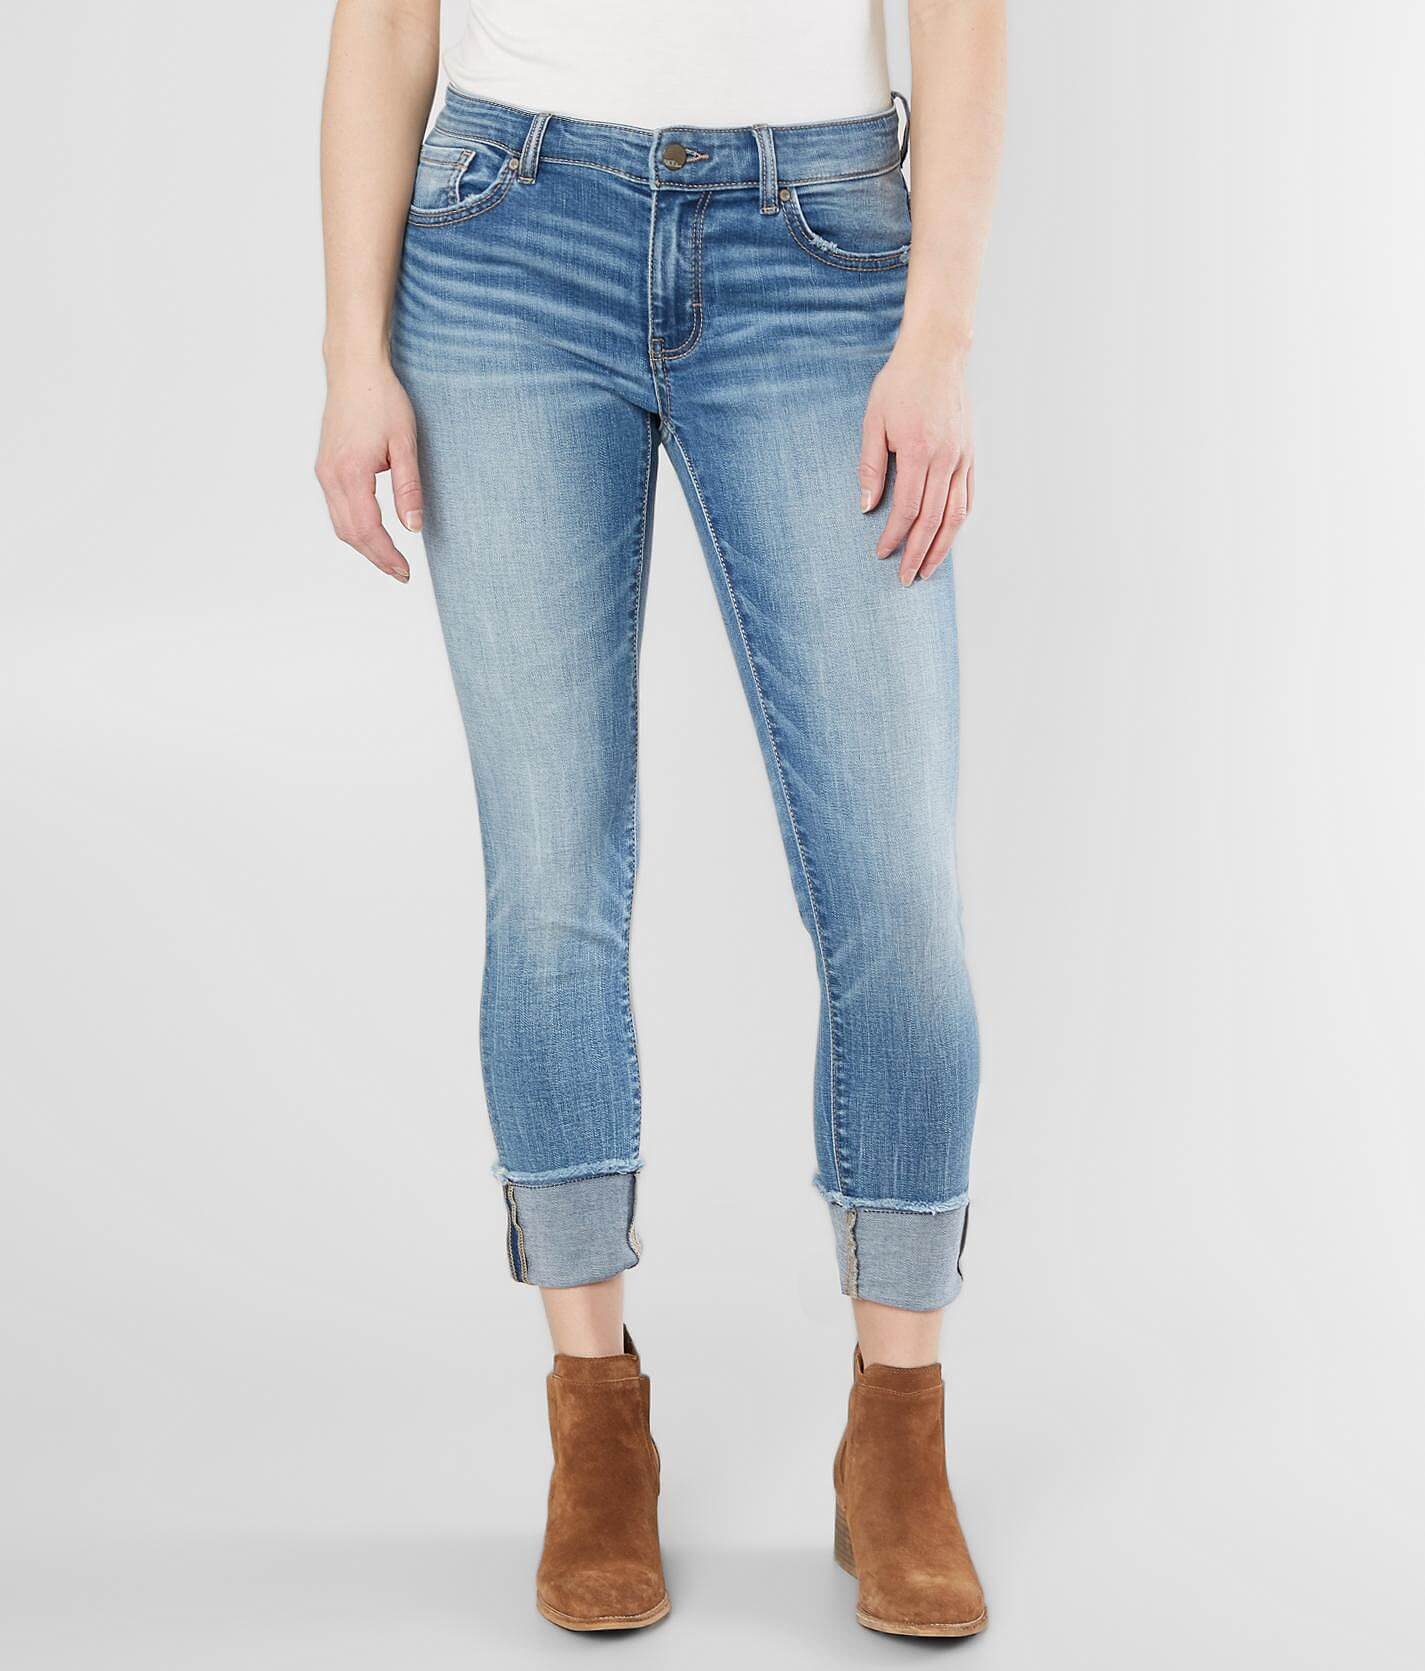 cuffed jeans womens